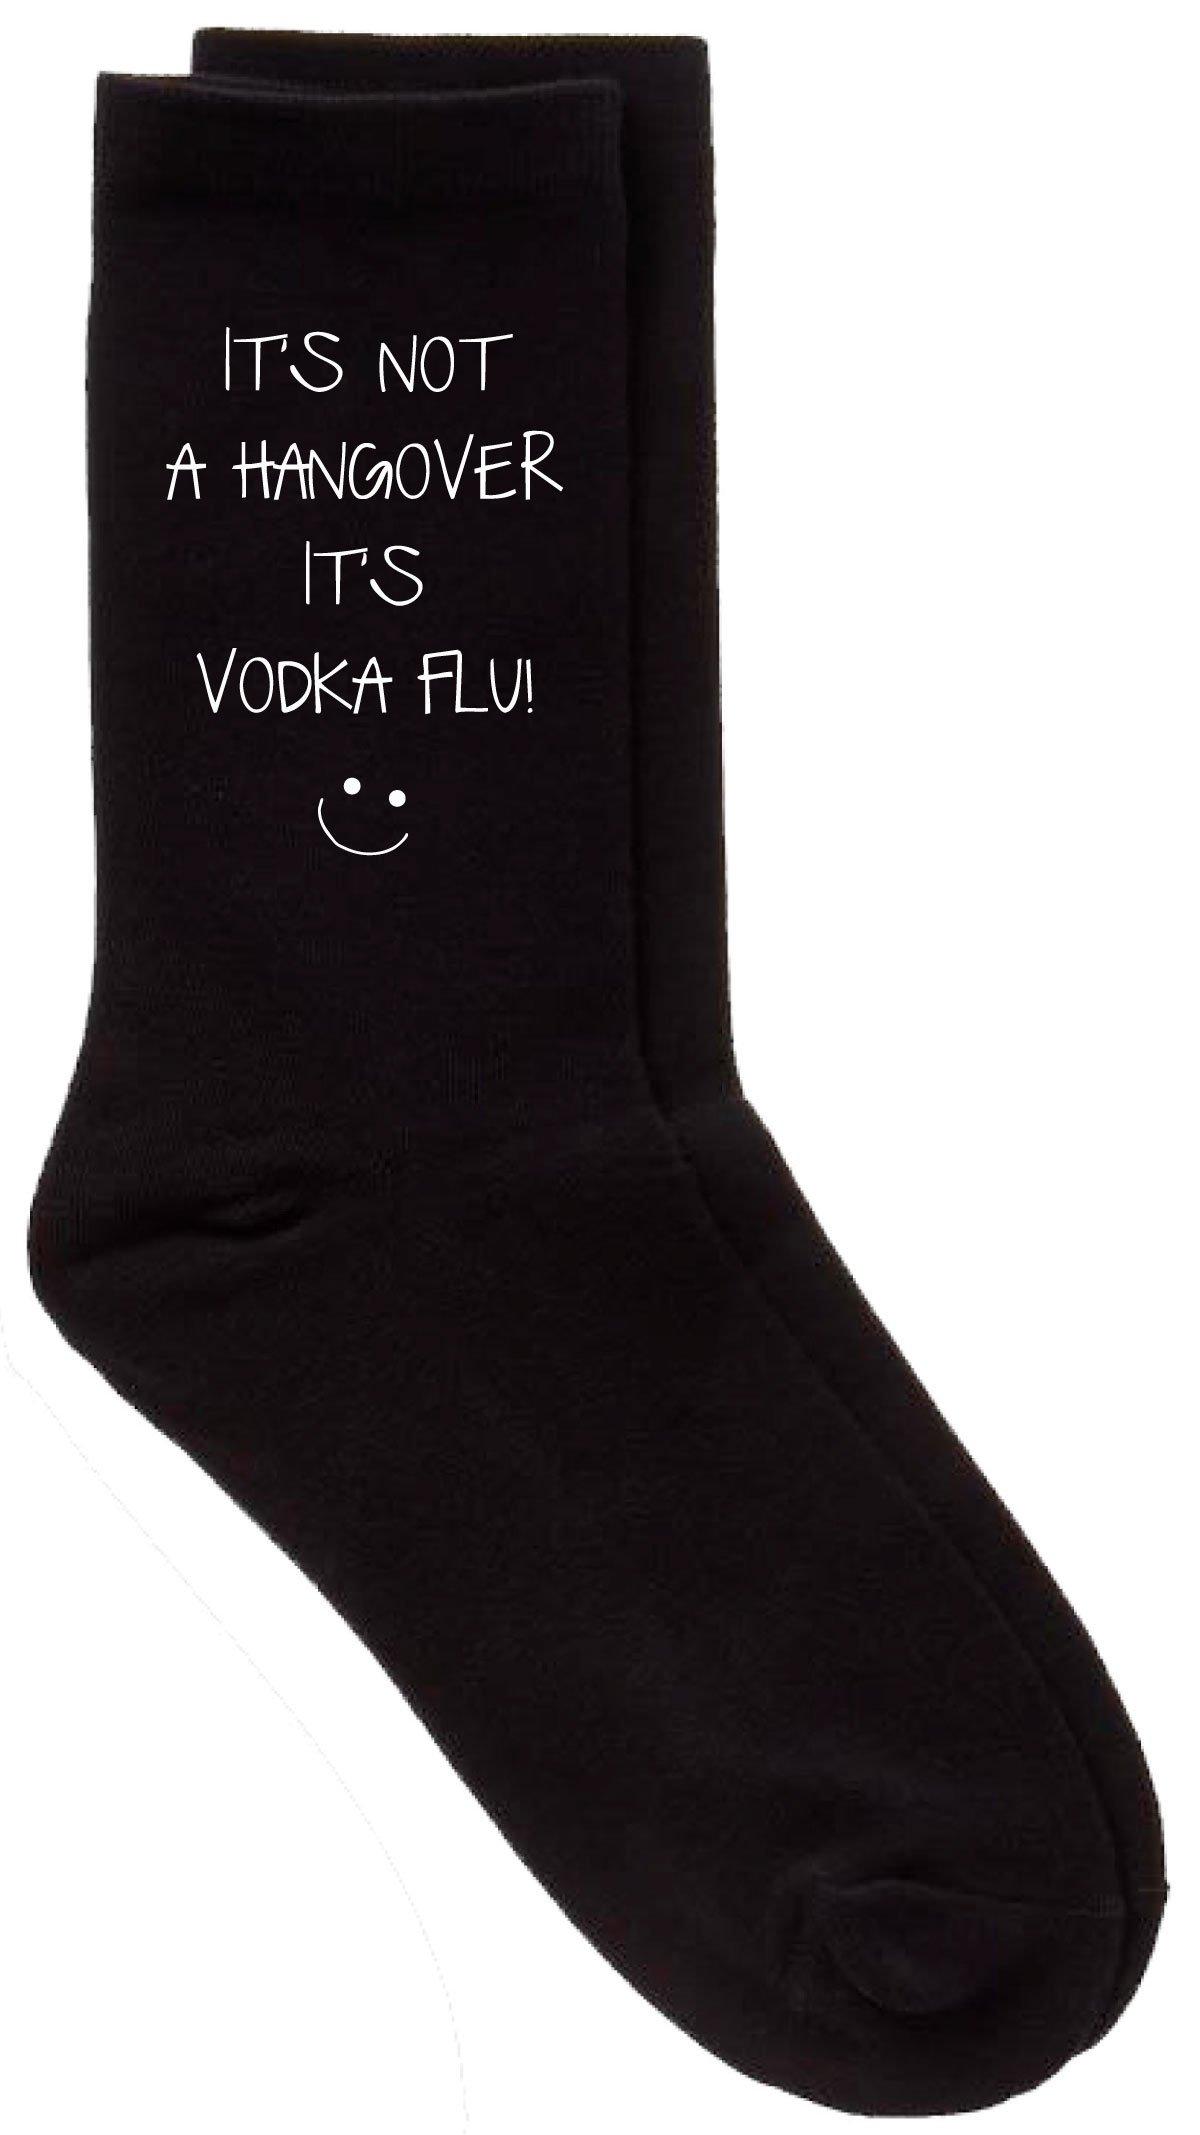 Hangover Vodka Flu Black Calf Socks